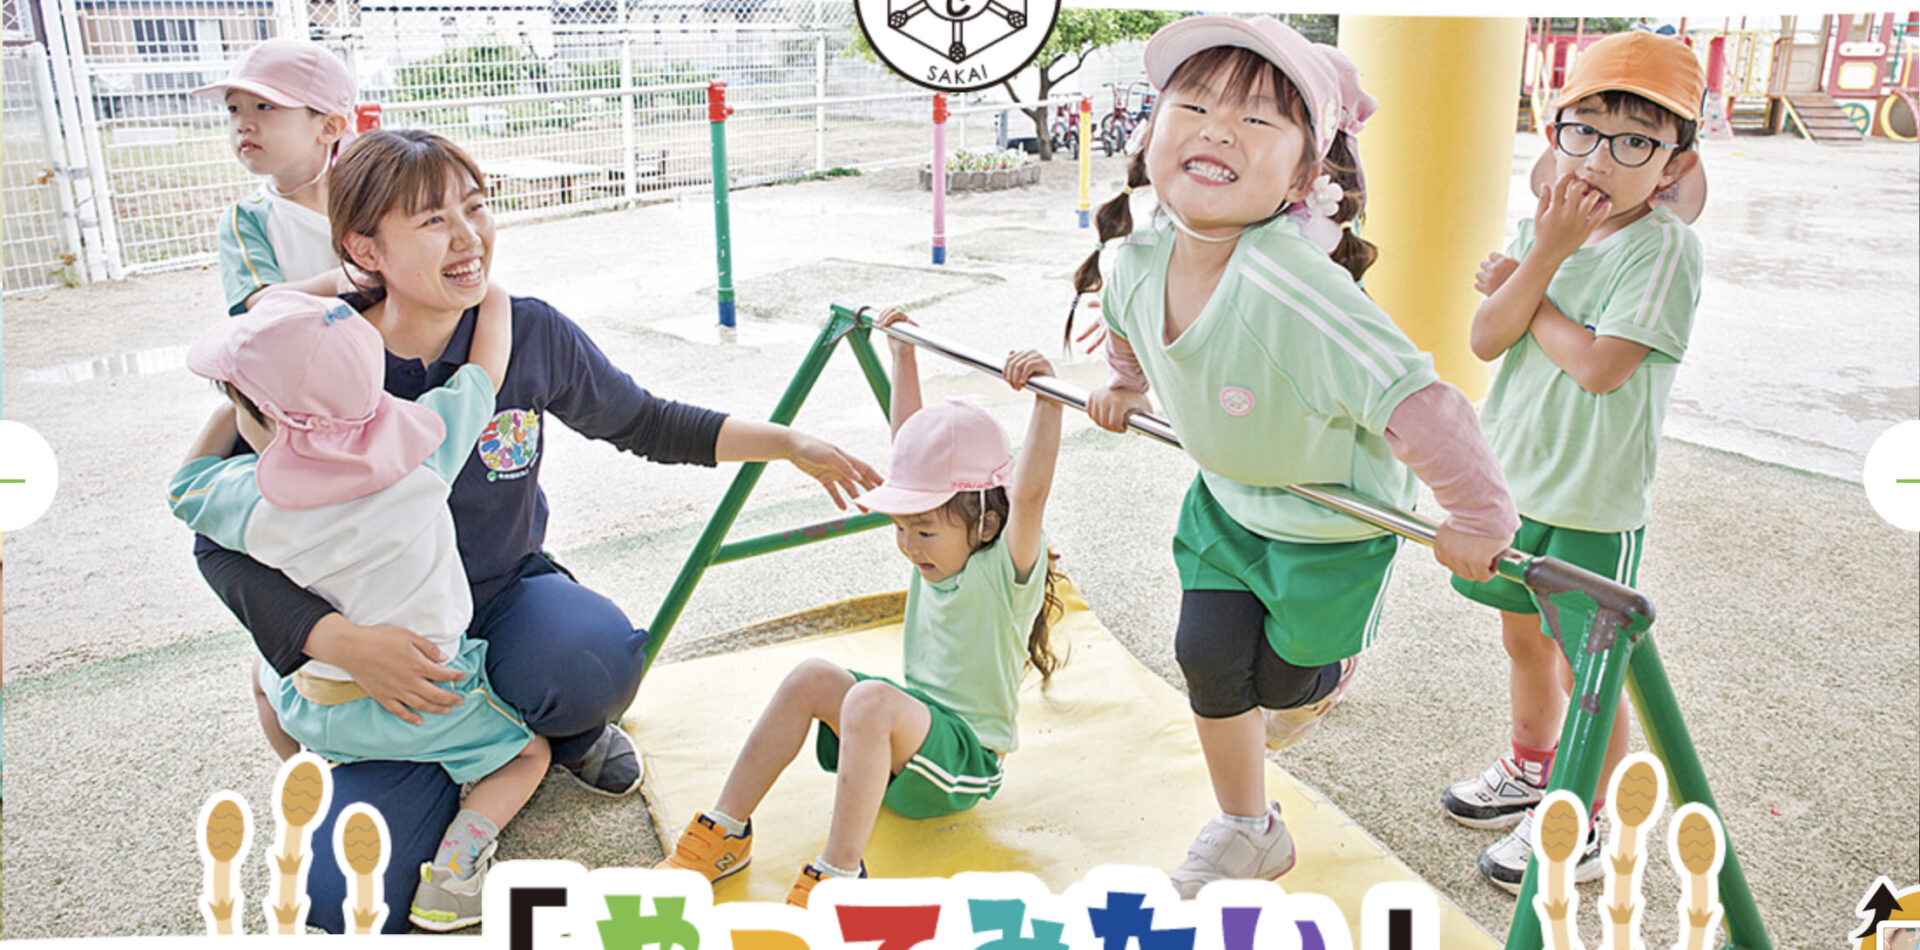 sakai-tsukushi-kodomoen-kindergarten